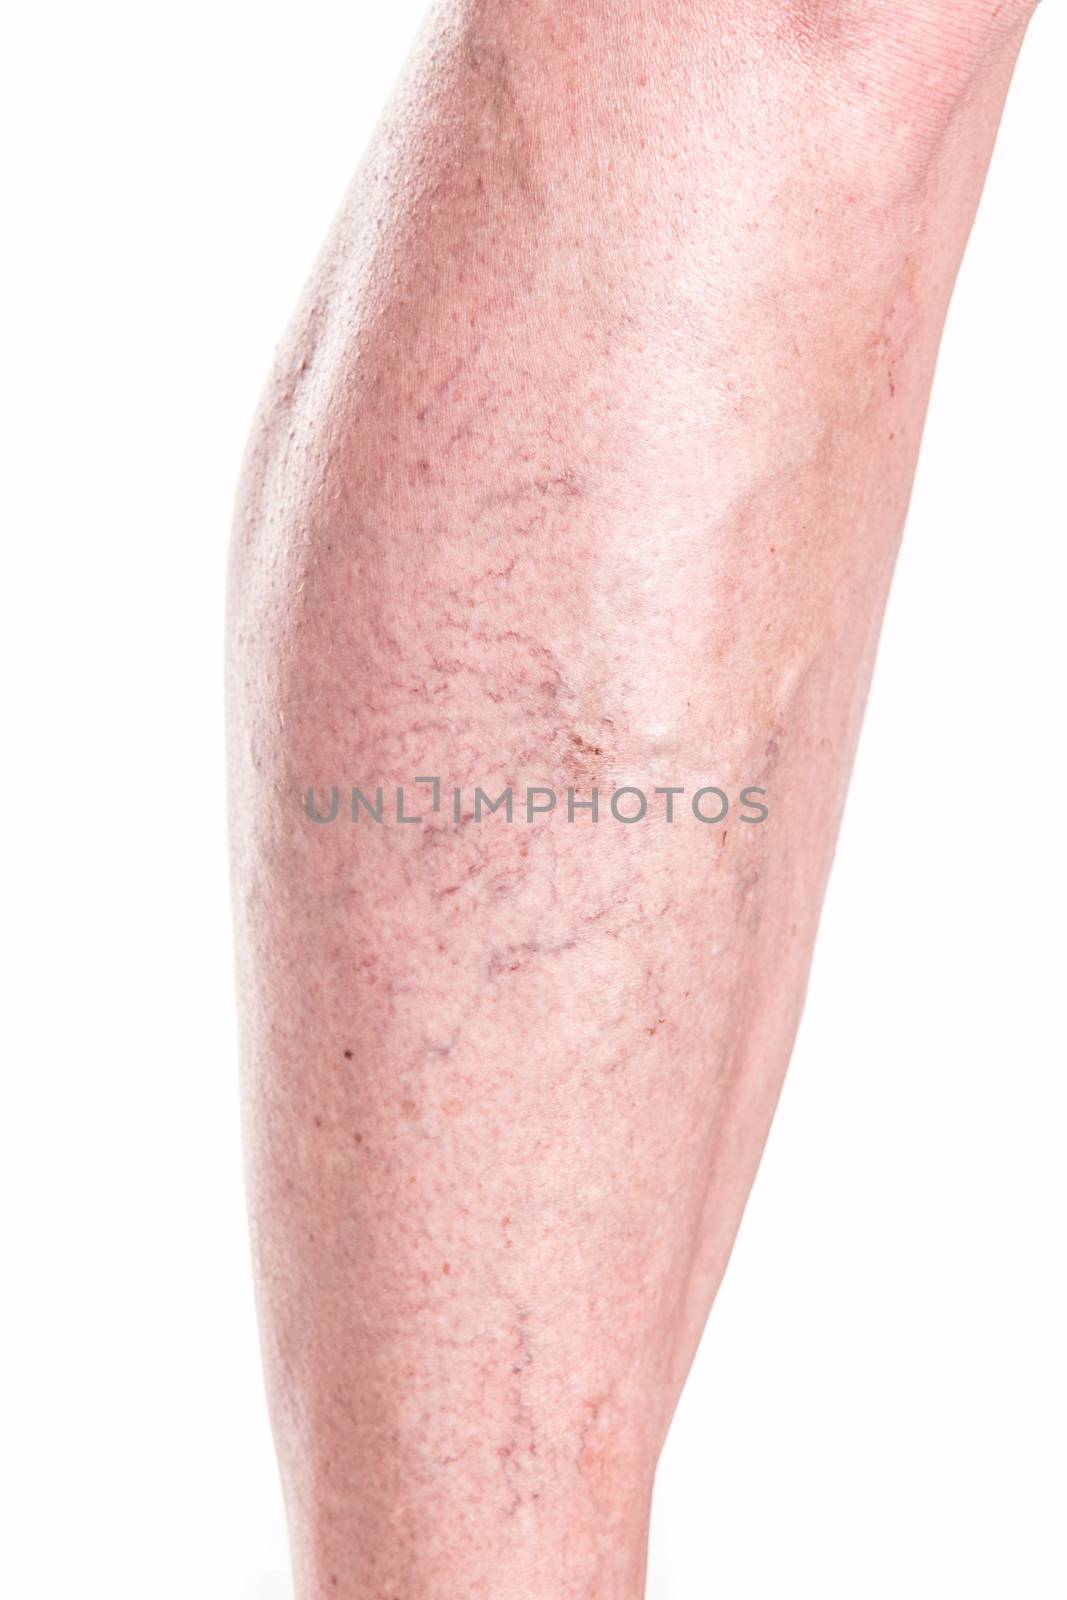 Varicose Veins on the legs of woman - studio shoot 